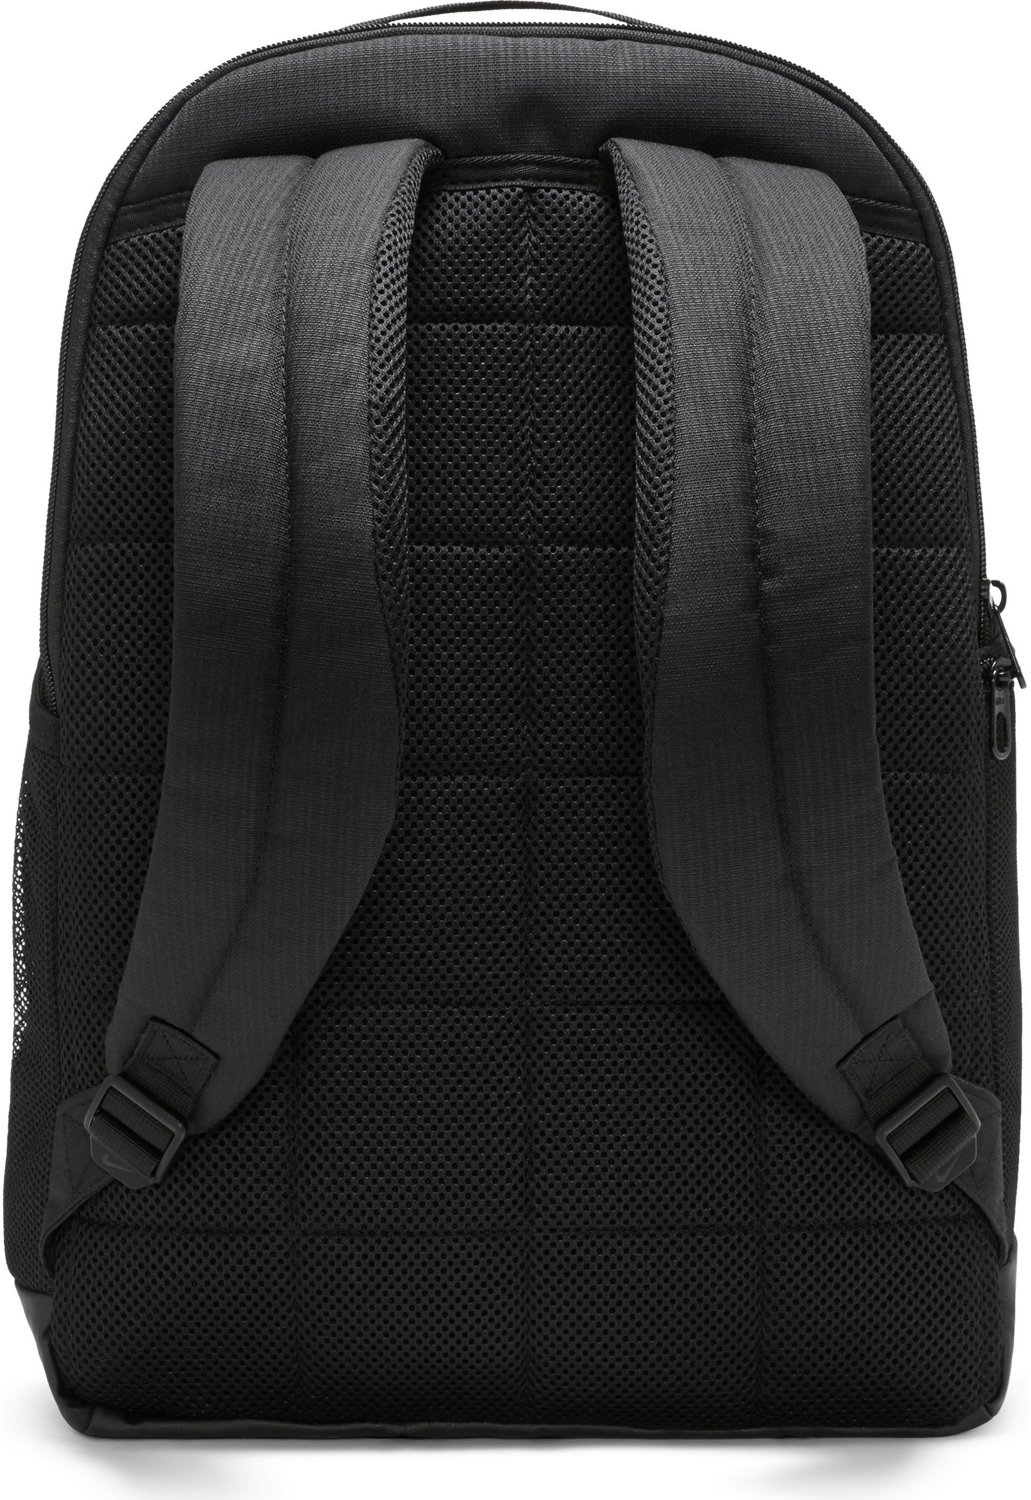 Nike Brasilia MD 9.5 Backpack | Free Shipping at Academy